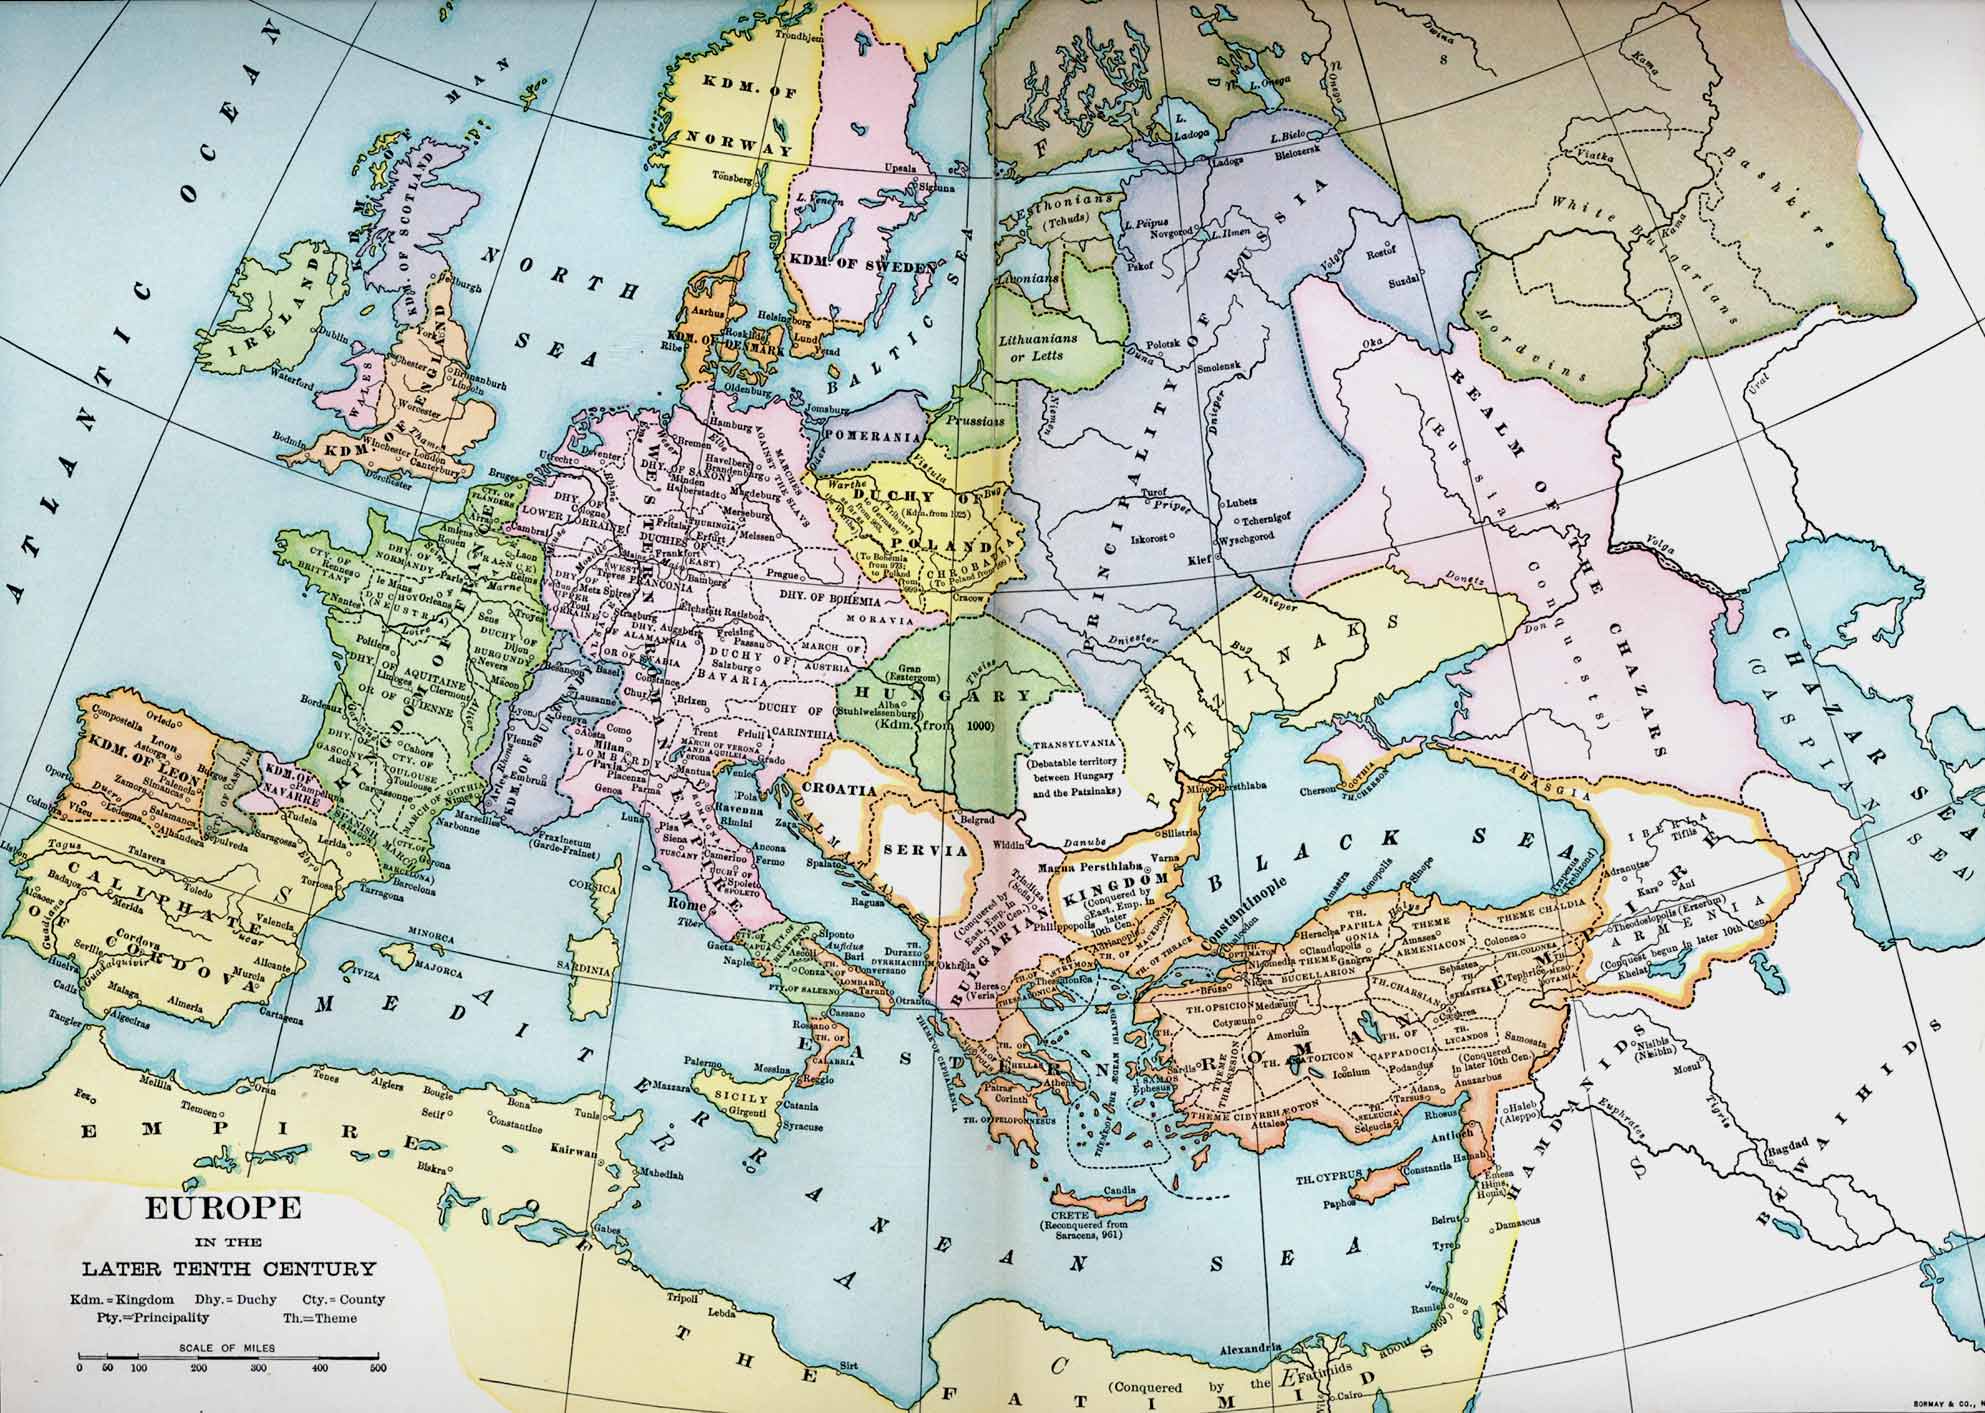 Tenth Century Europe